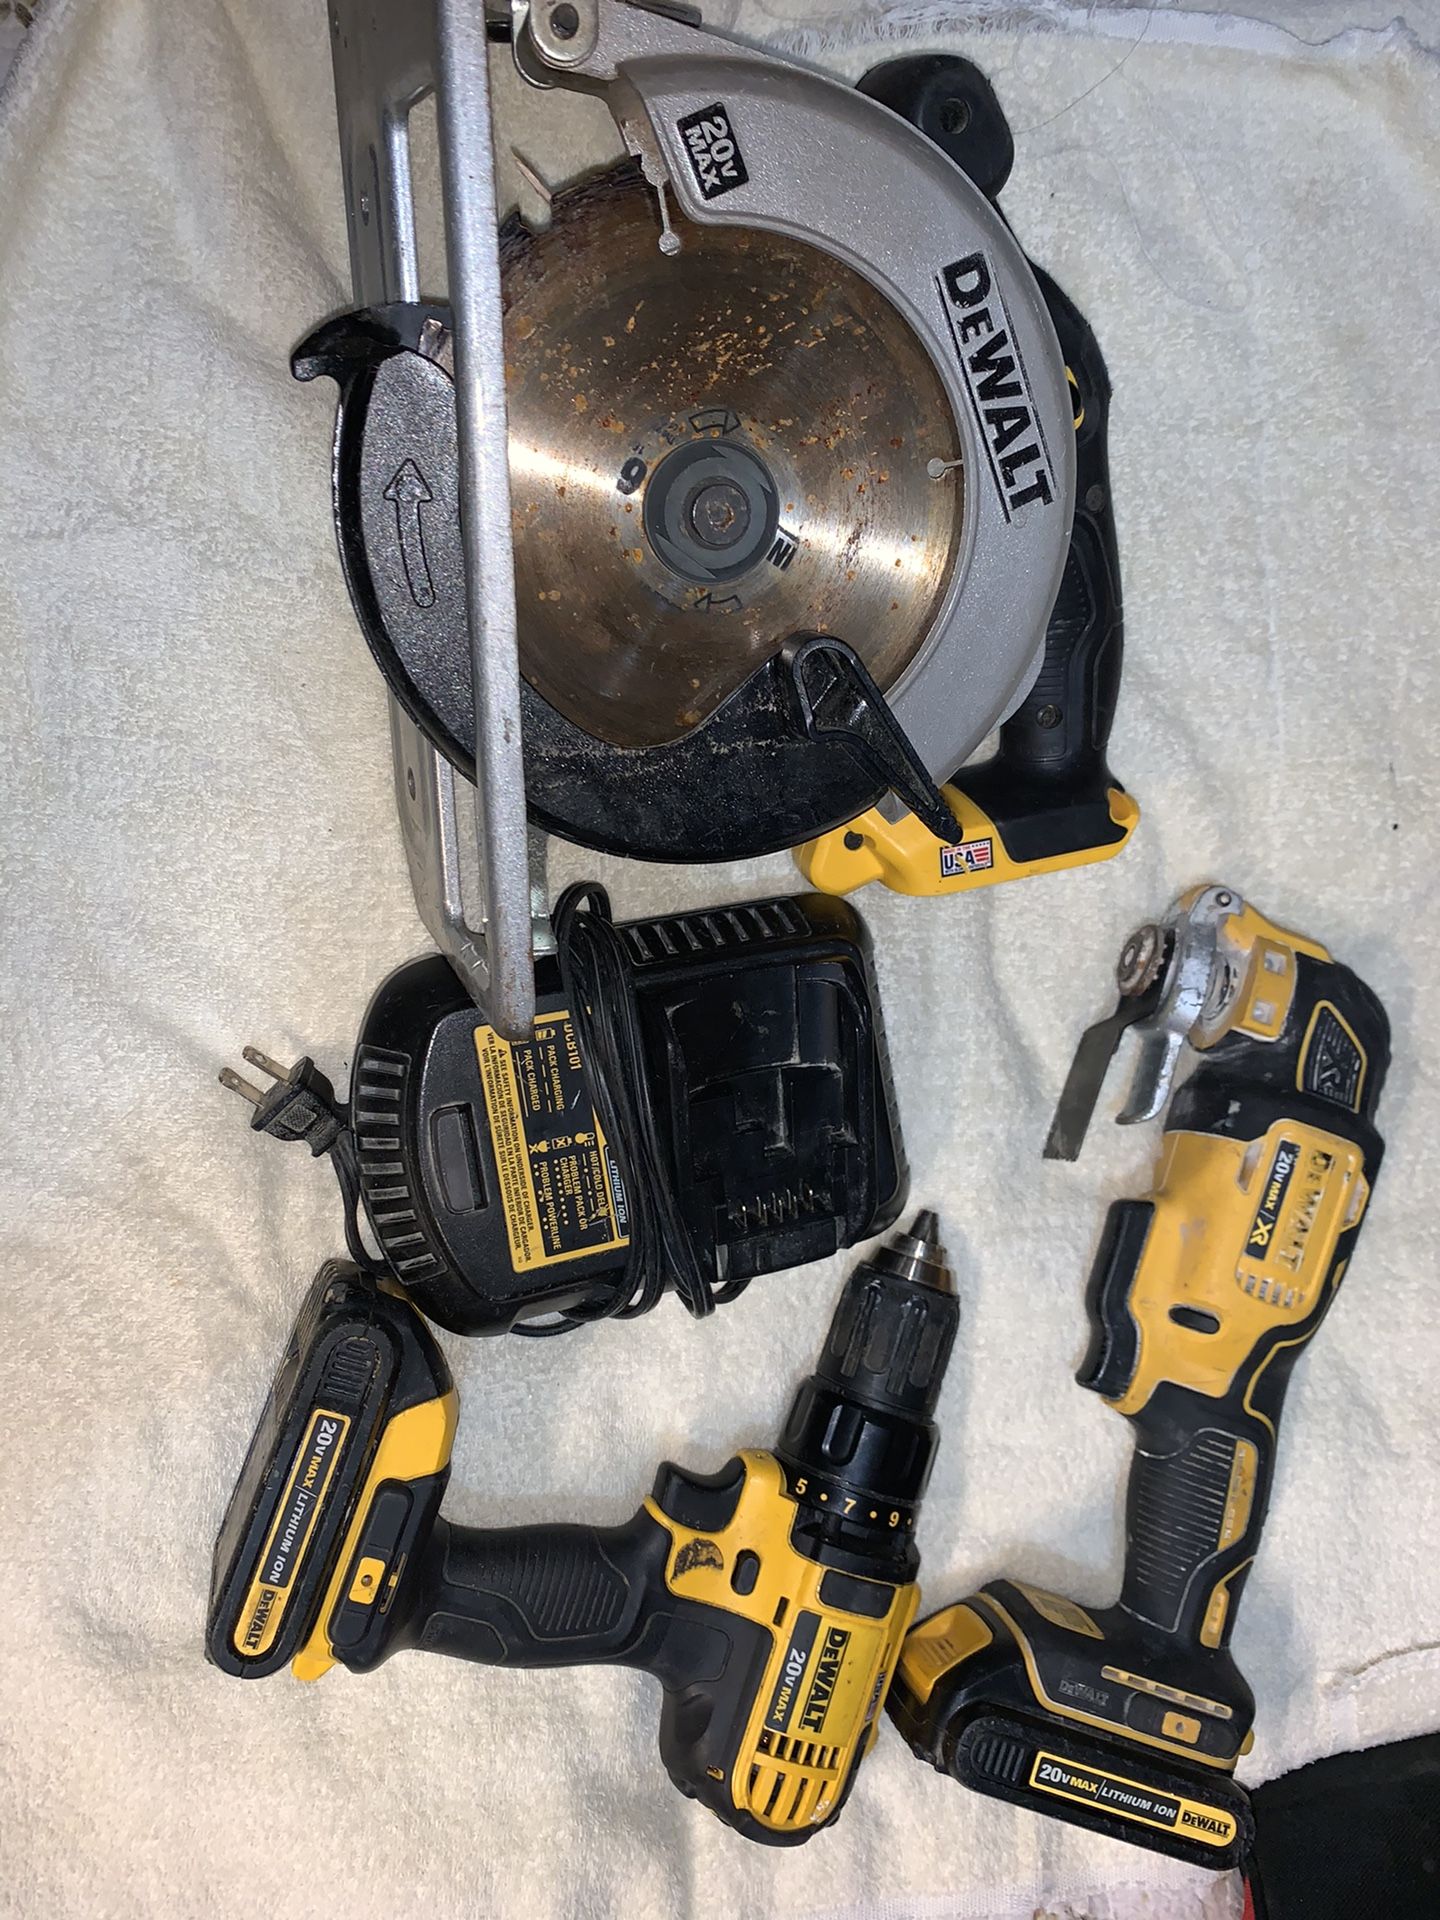 Dewalt 20v tools 6 1/2” circular saw multi tool and drill